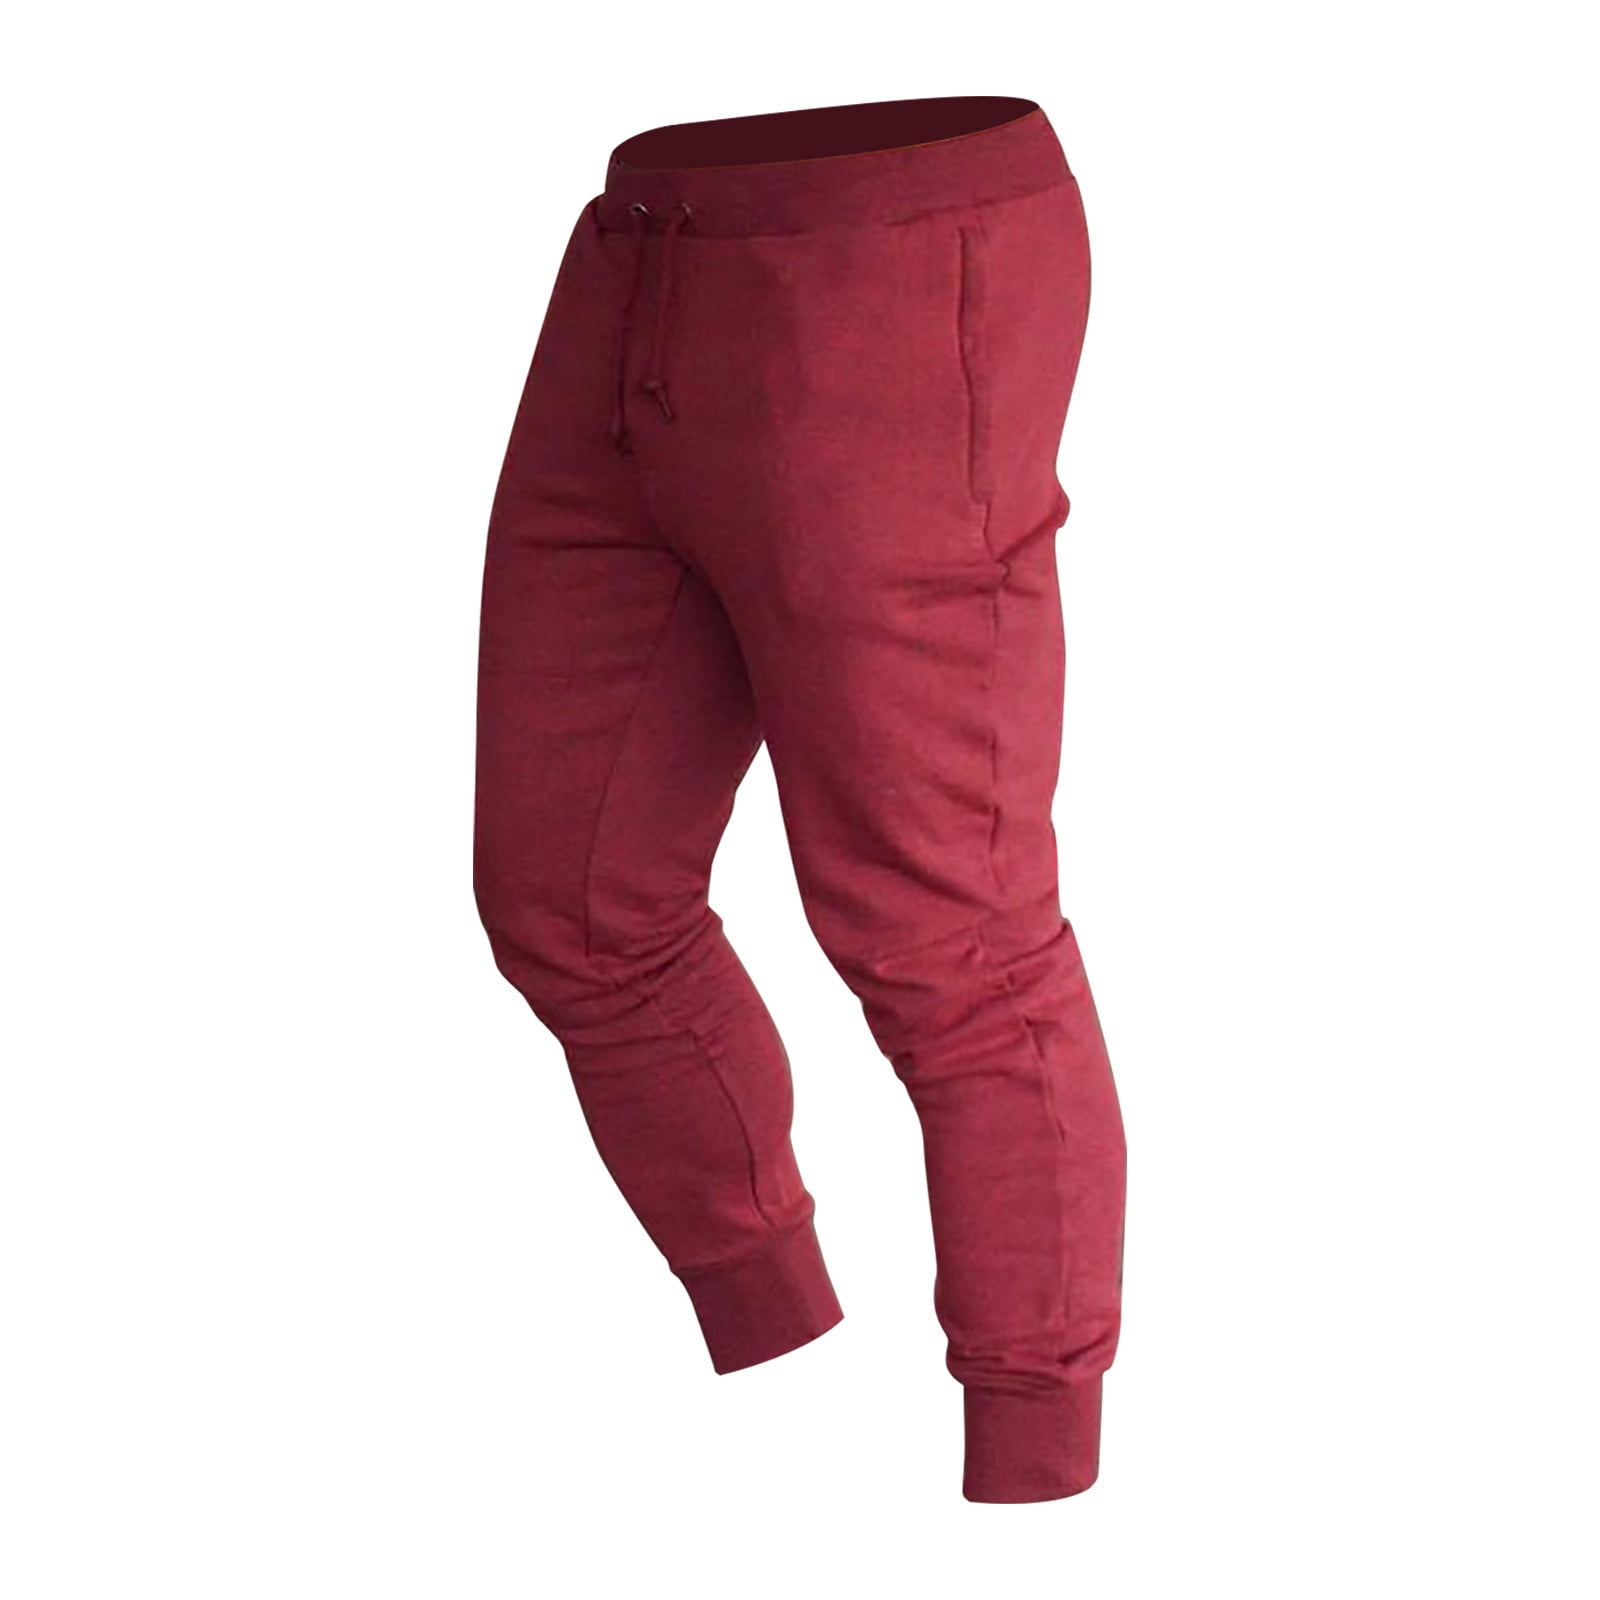 LEEy-world Sweatpants for Men Mens Workout Pants Elastic-Waist